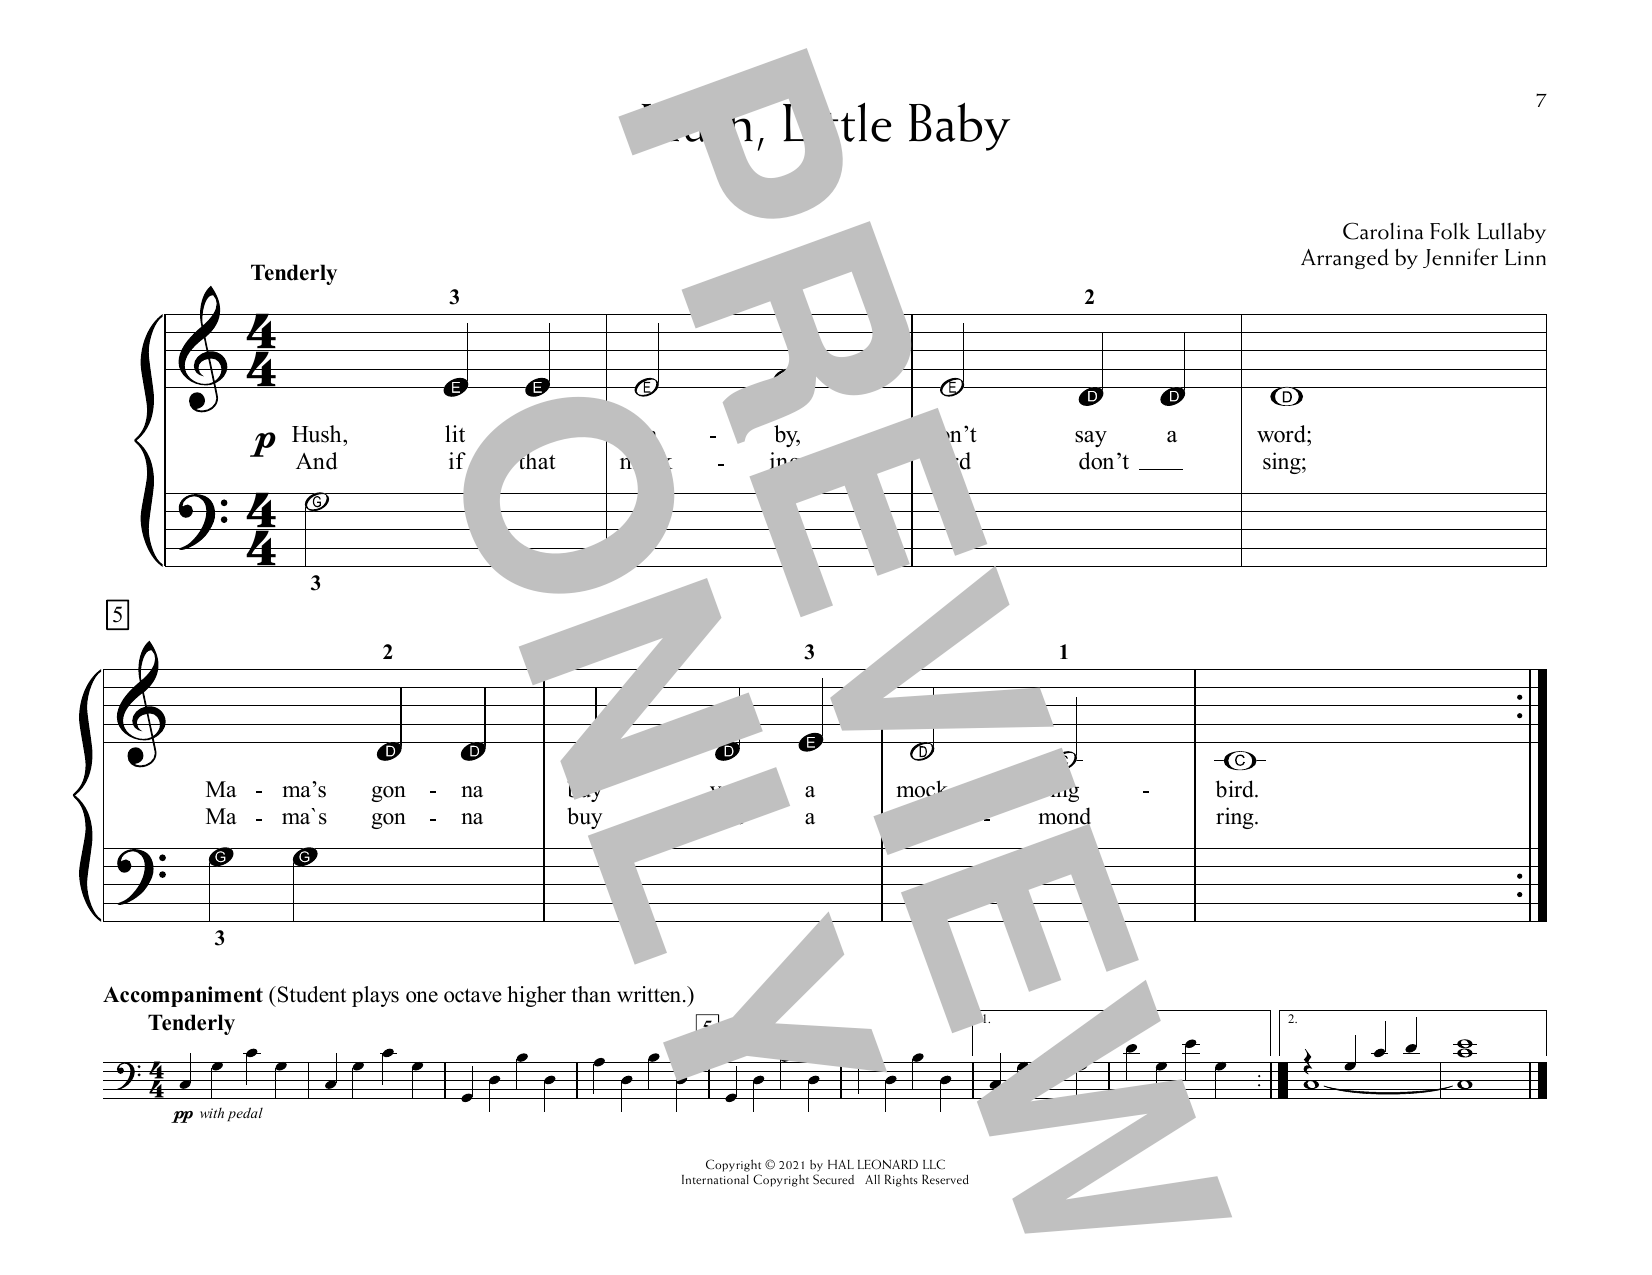 Carolina Folk Lullaby Hush Little Baby (arr. Jennifer Linn) Sheet Music Notes & Chords for Educational Piano - Download or Print PDF